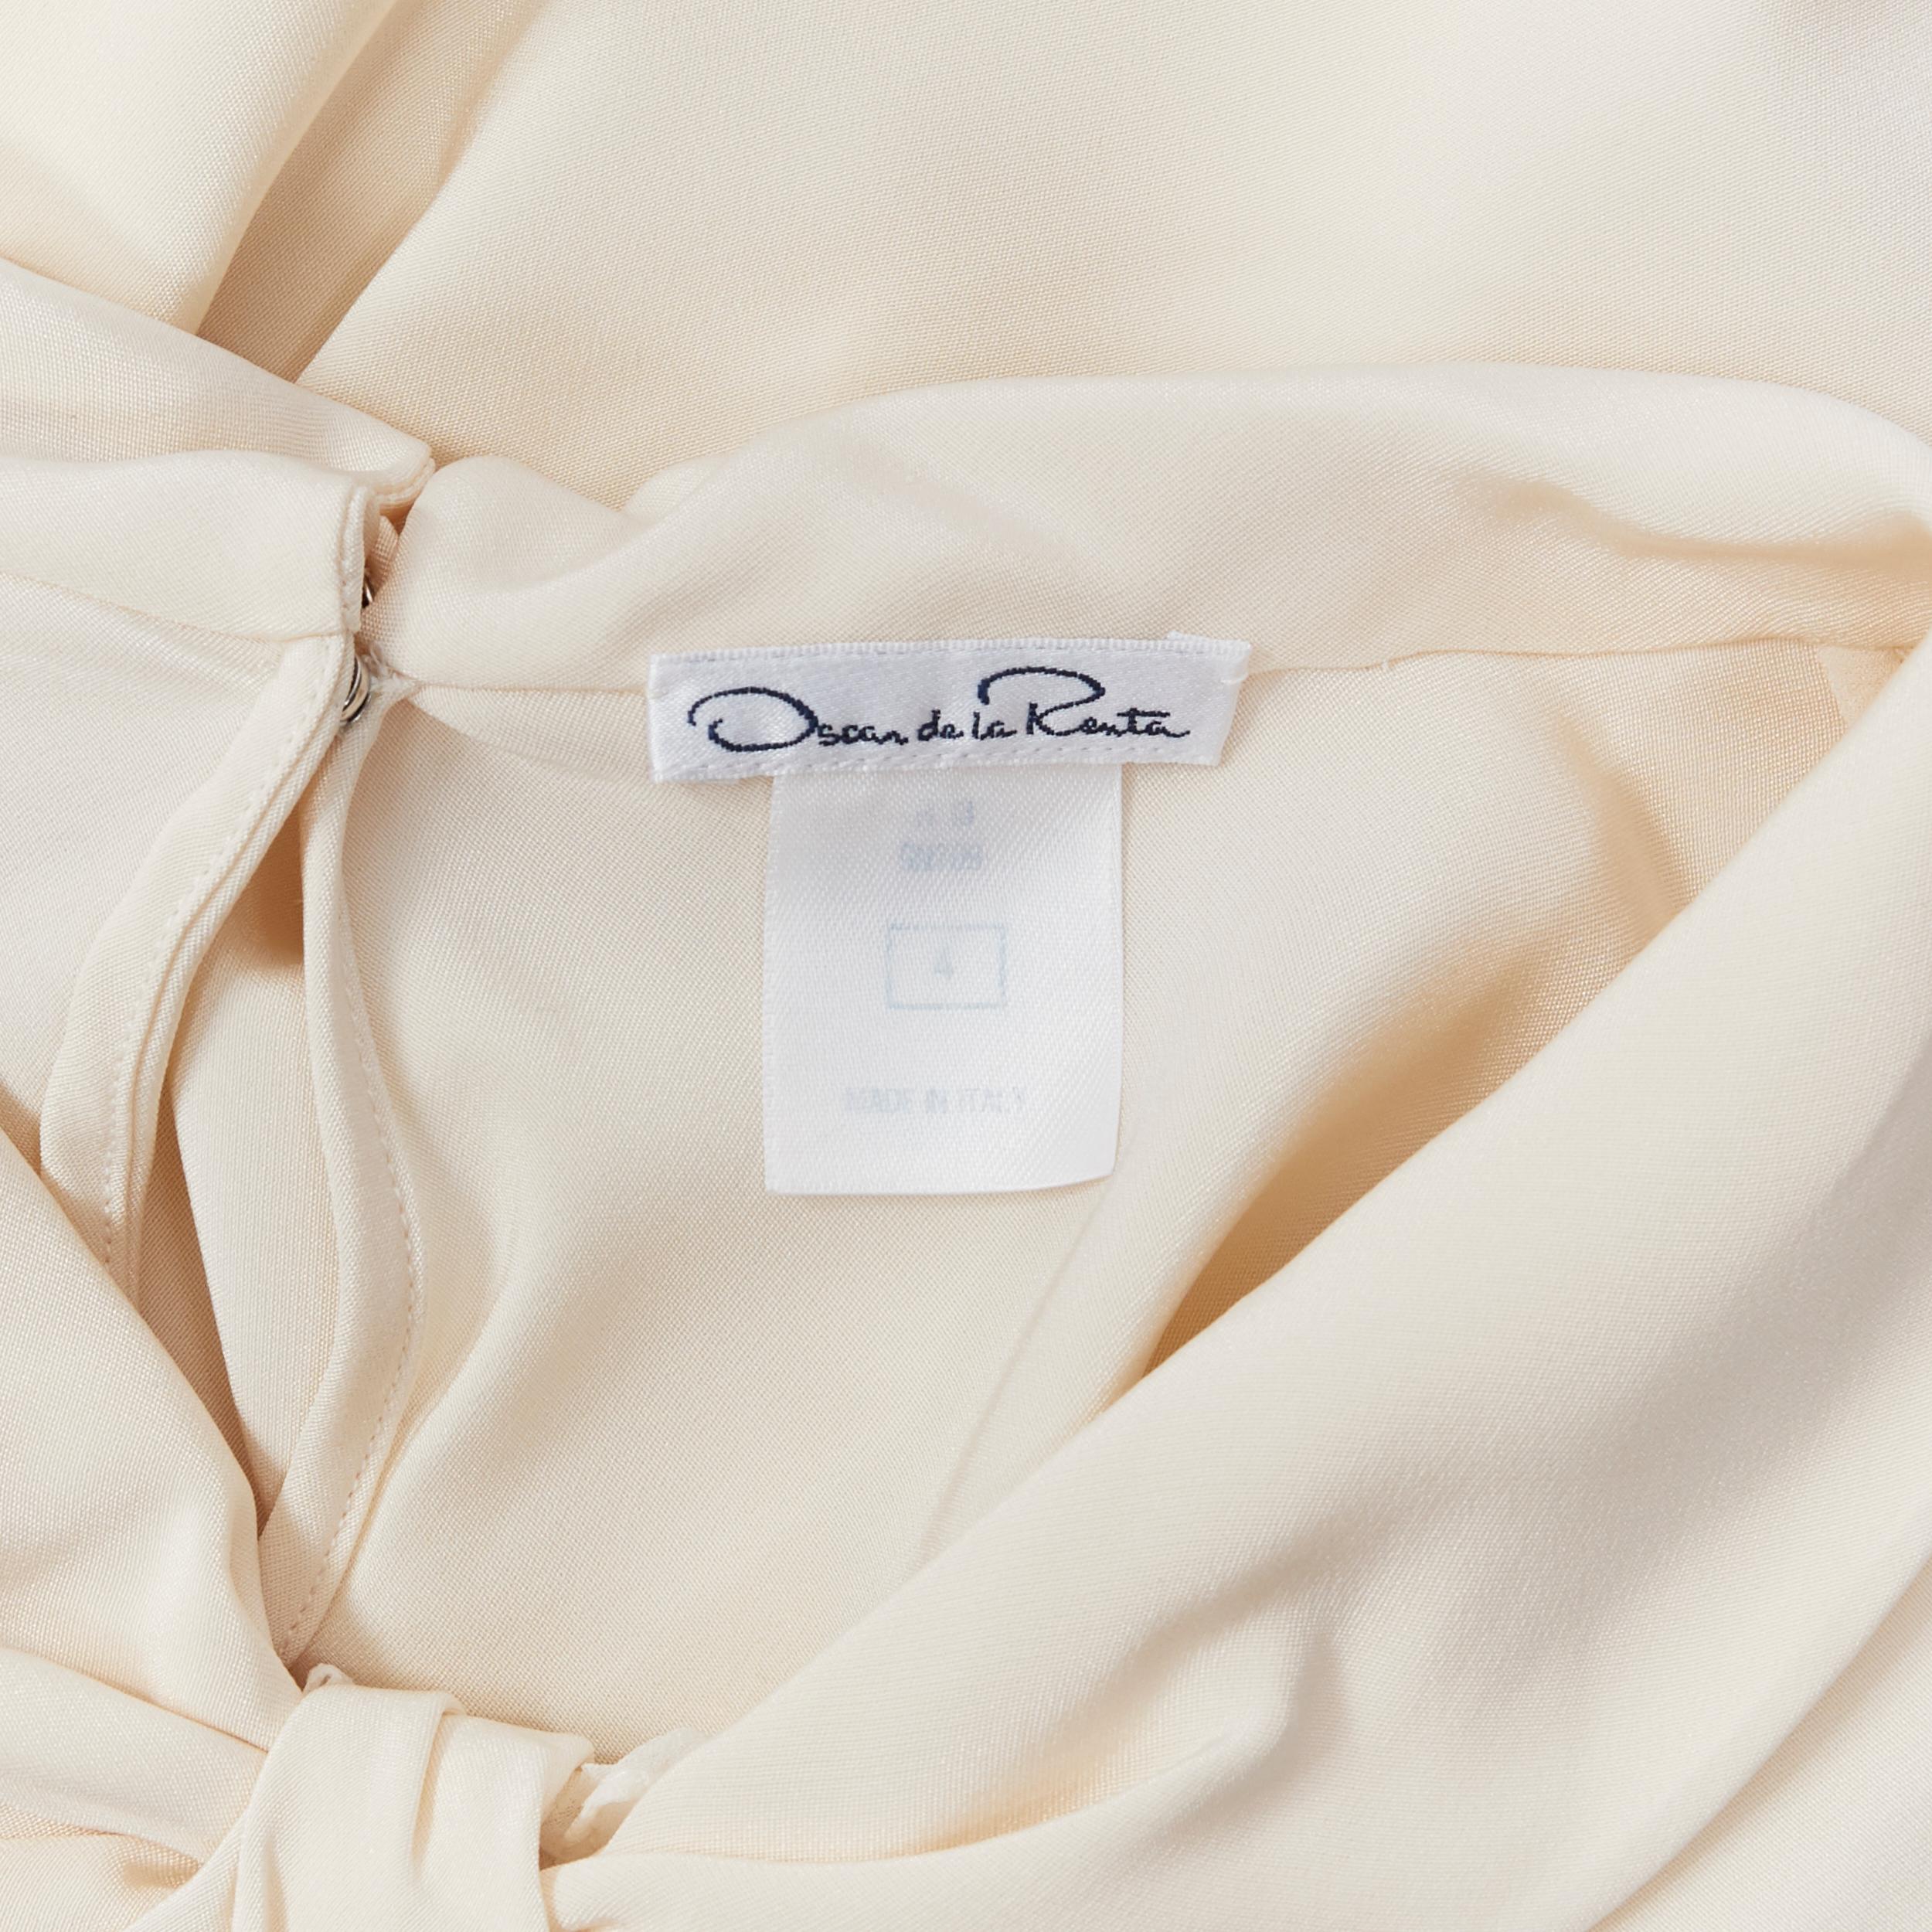 OSCAR DE LA RENTA R13 100% silk beige cream knot neckline sleeveless top US4 5